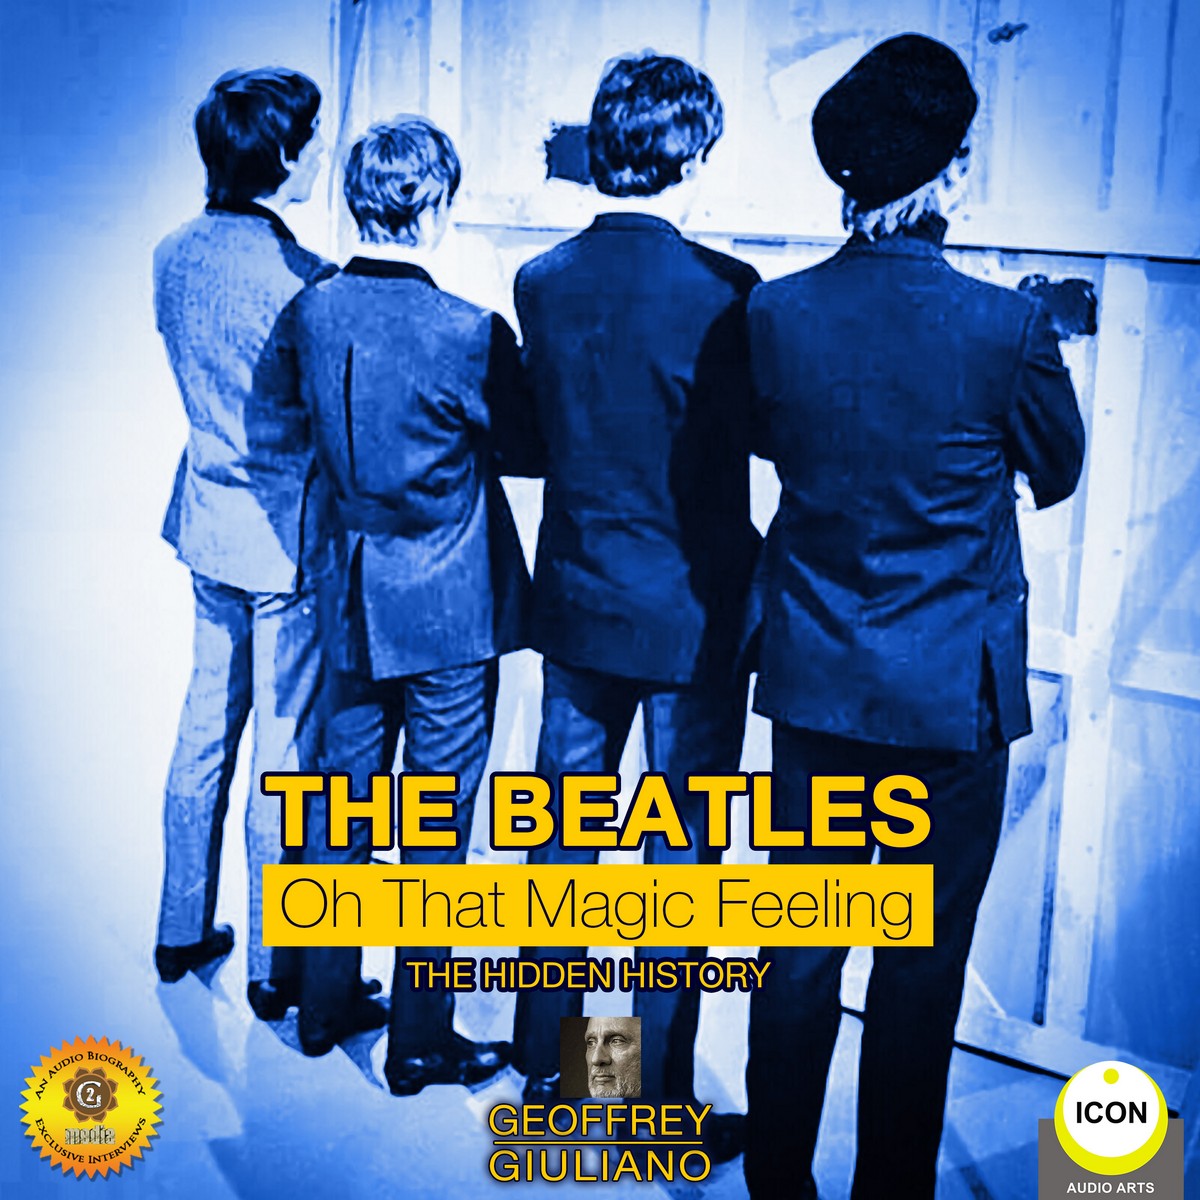 The Beatles: Oh That Magic Feeling